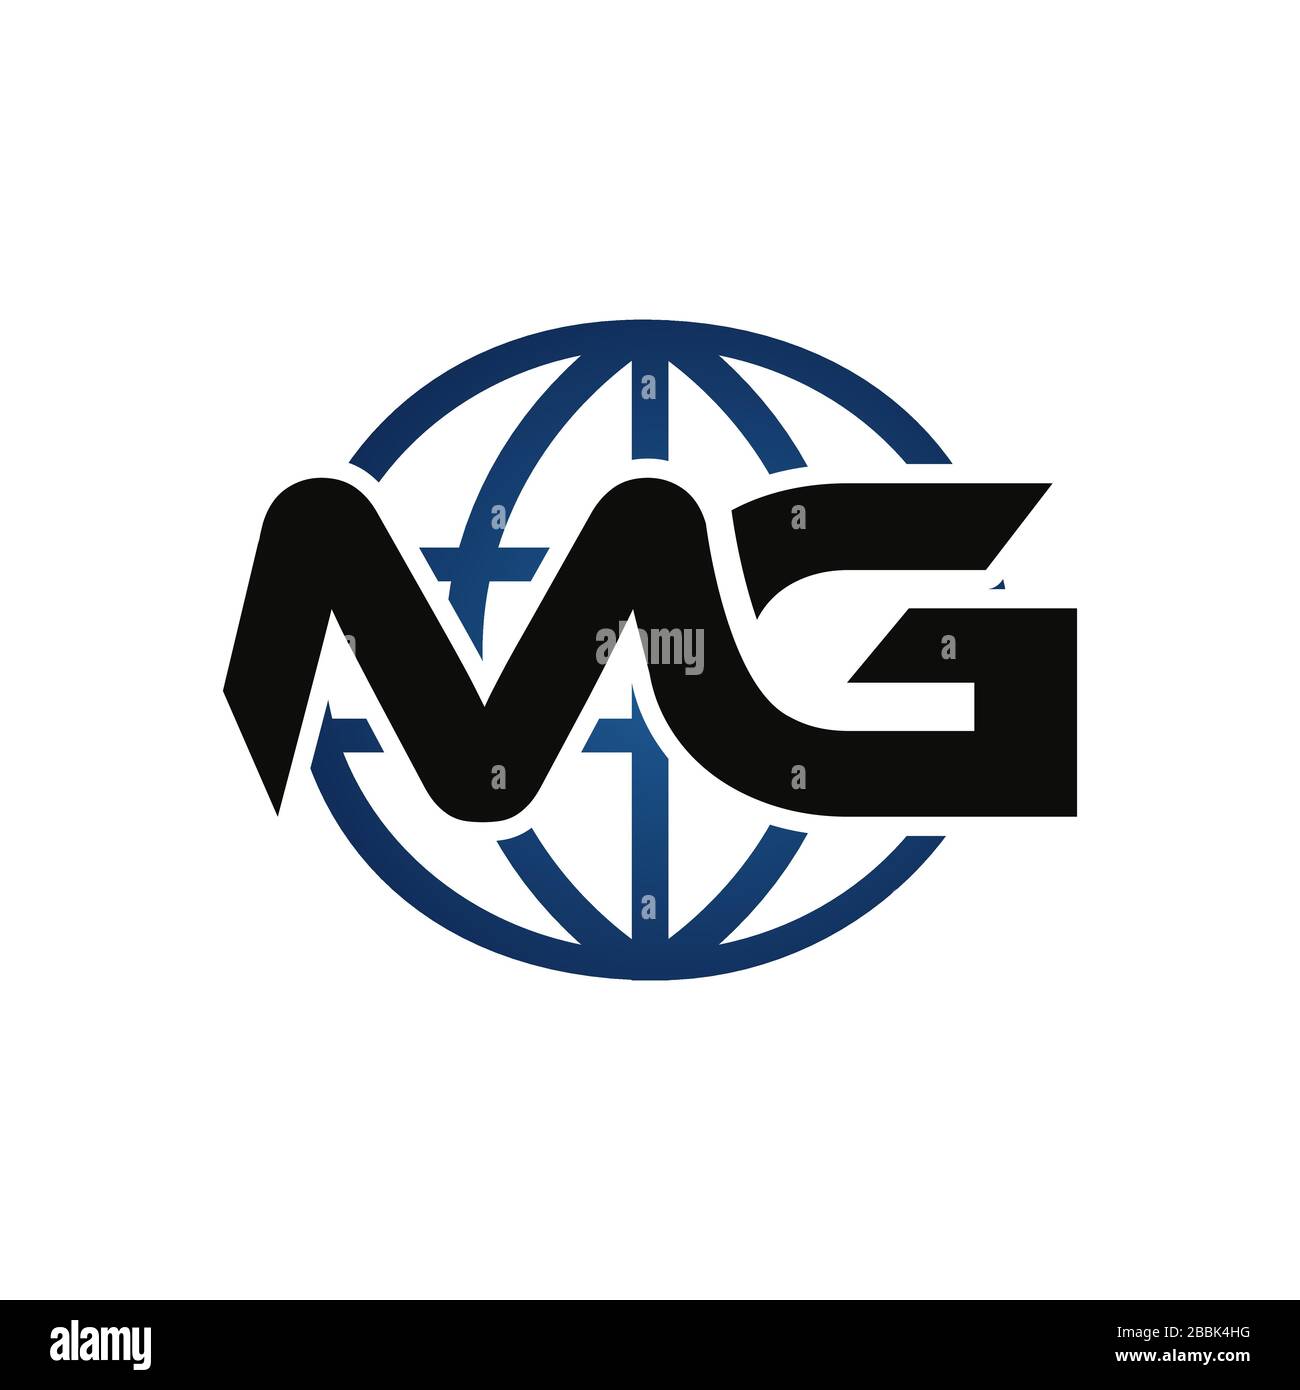 Image of Mg logo design on background-PO559461-Picxy